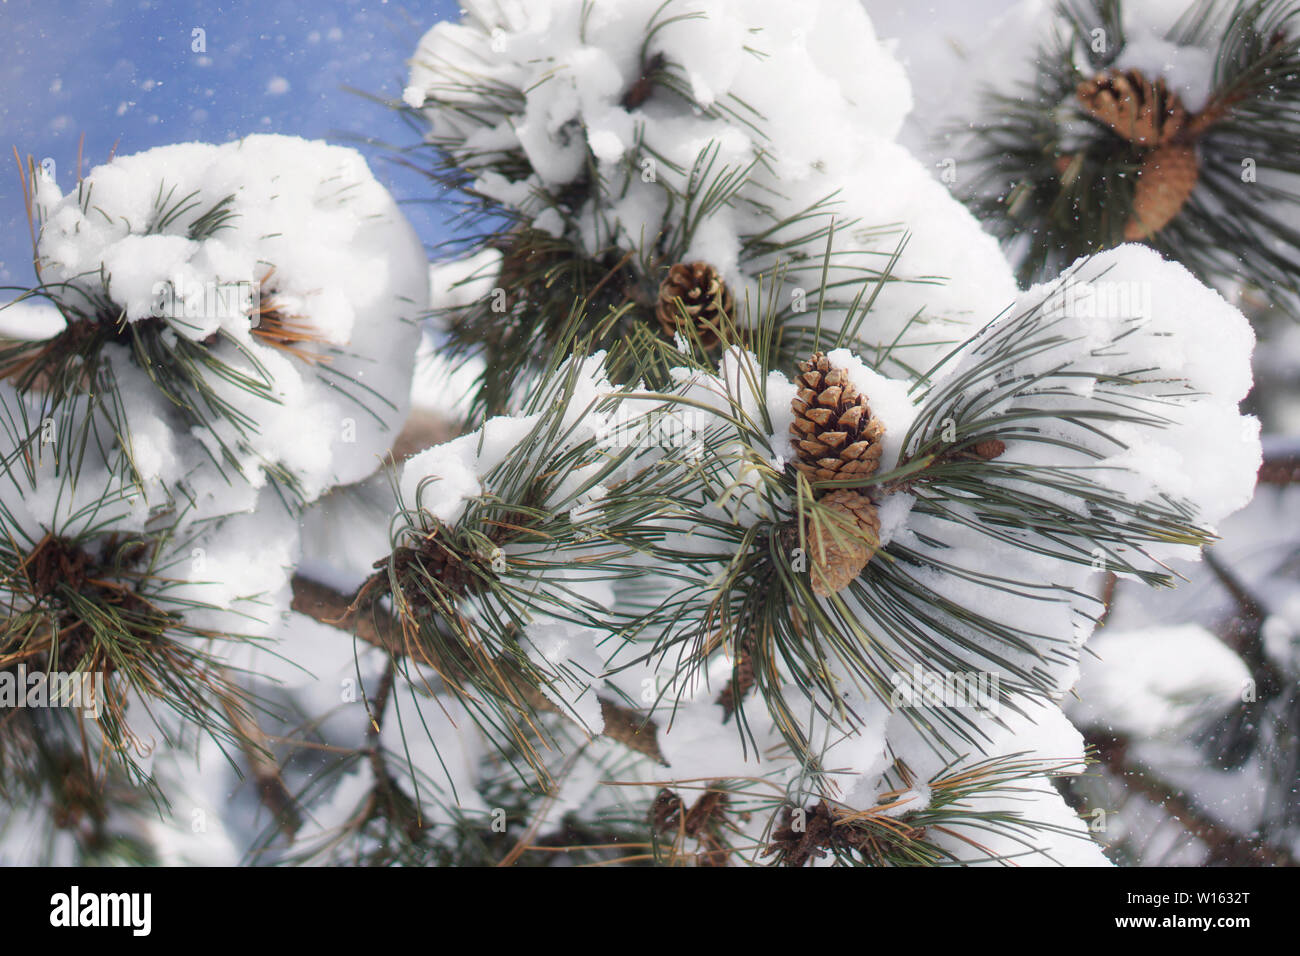 Pine Cones with Snow, Pine Needles covered with Snow, Winter Scene Stock Photo